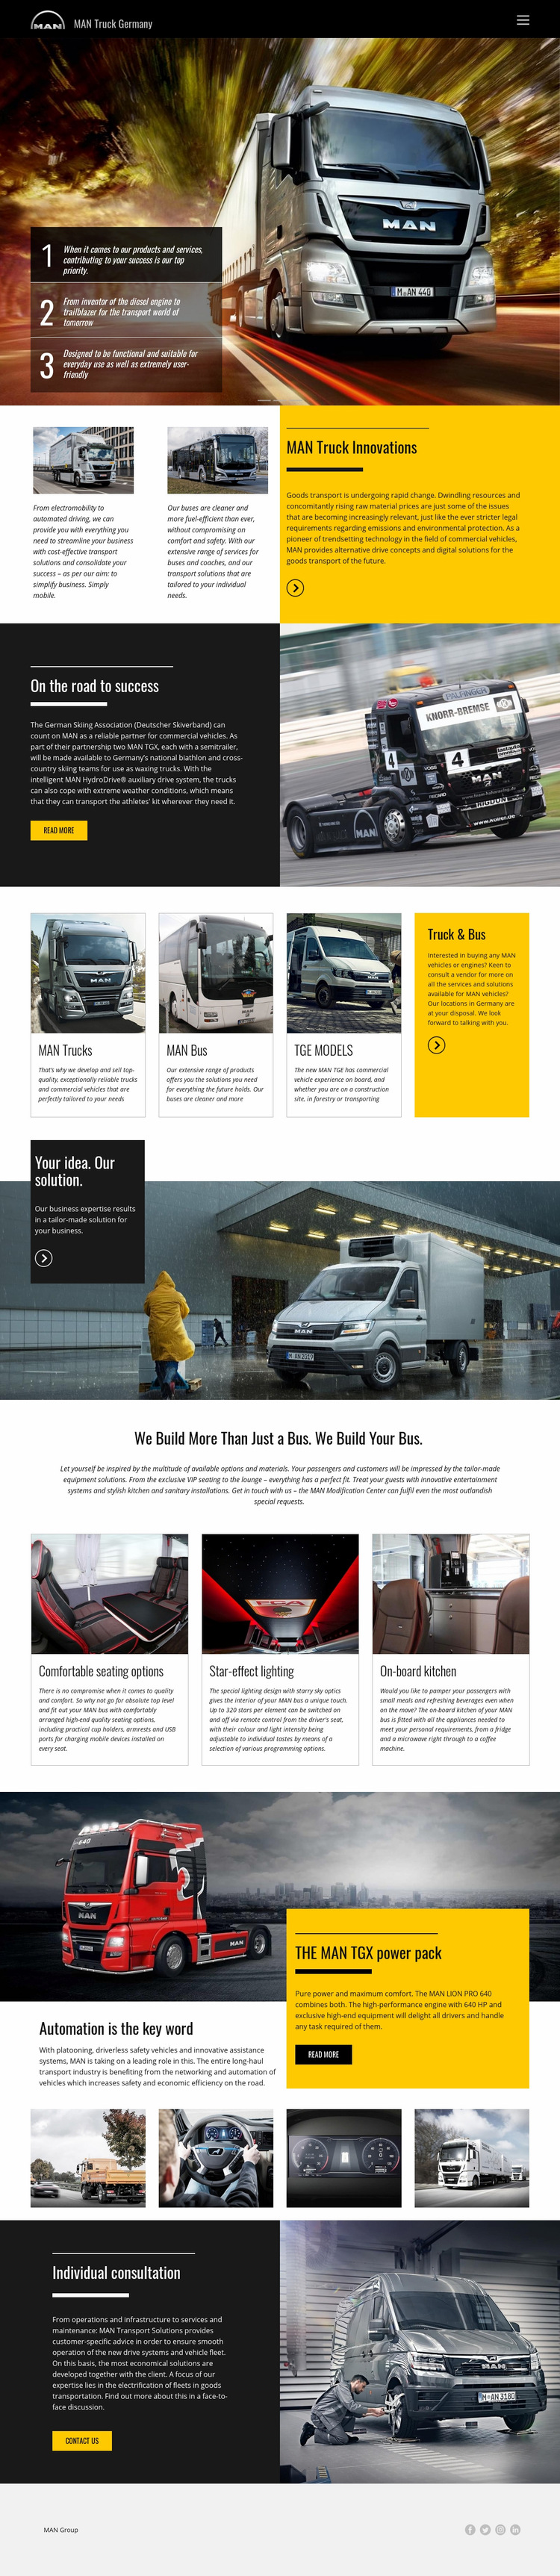 Man trucks for transportation Web Page Design